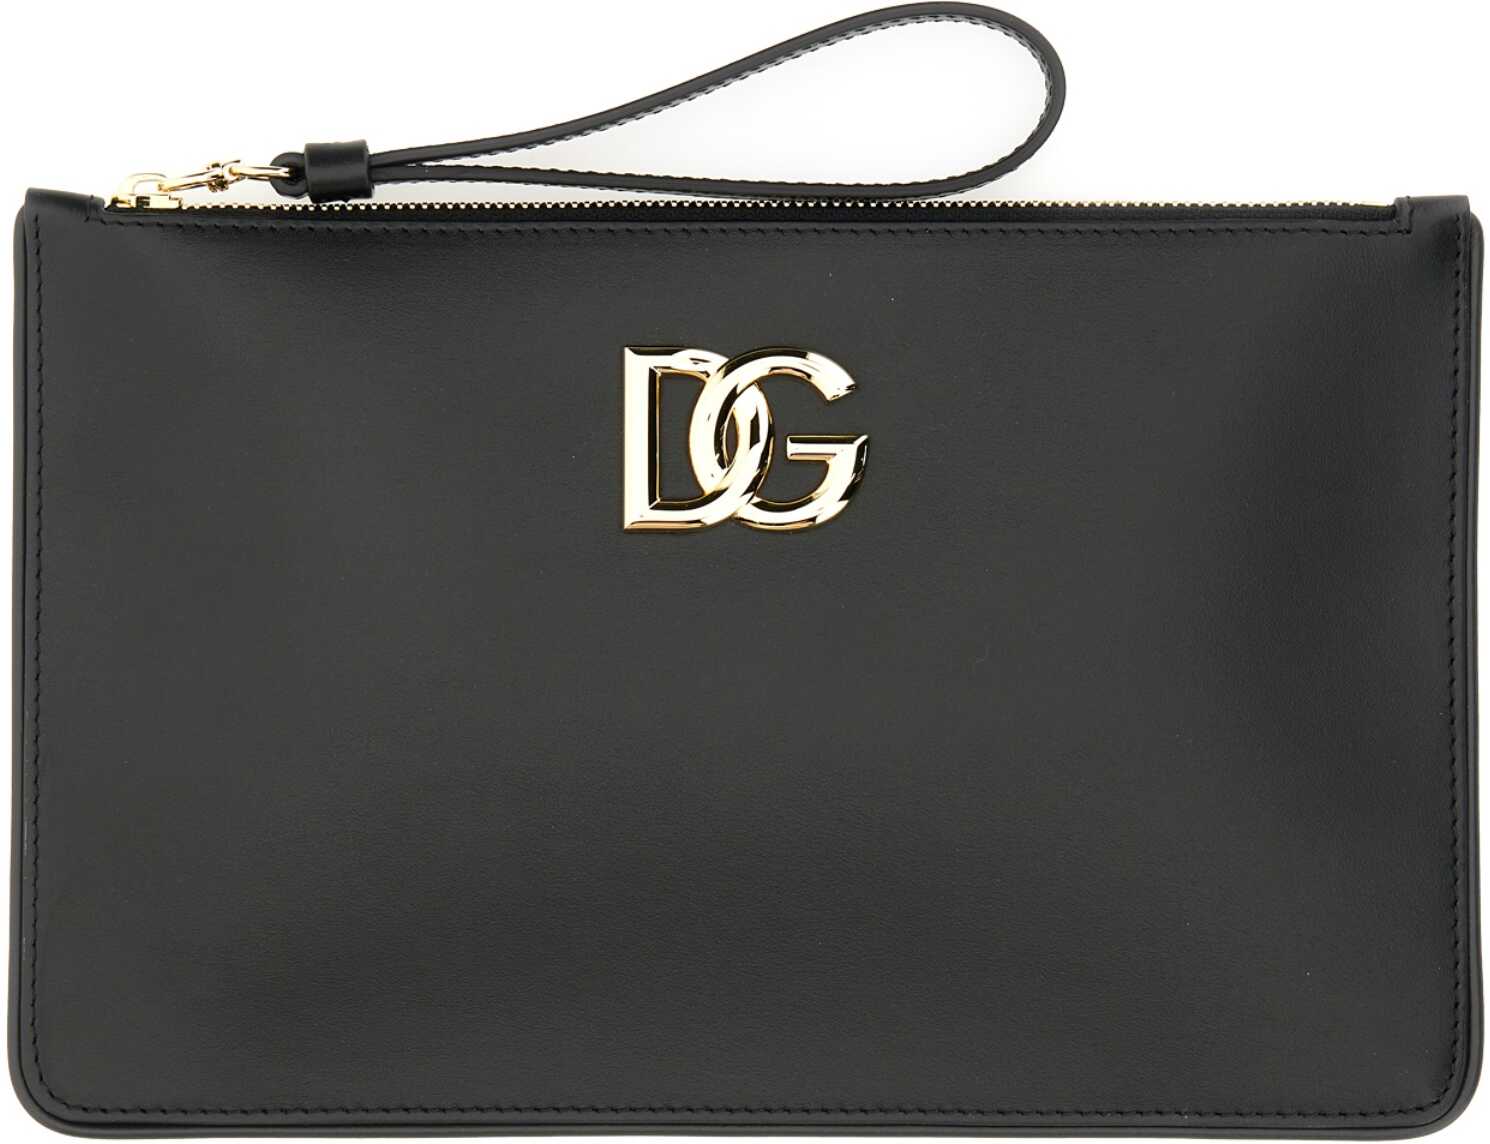 Dolce & Gabbana Leather Clutch Bag BLACK b-mall.ro